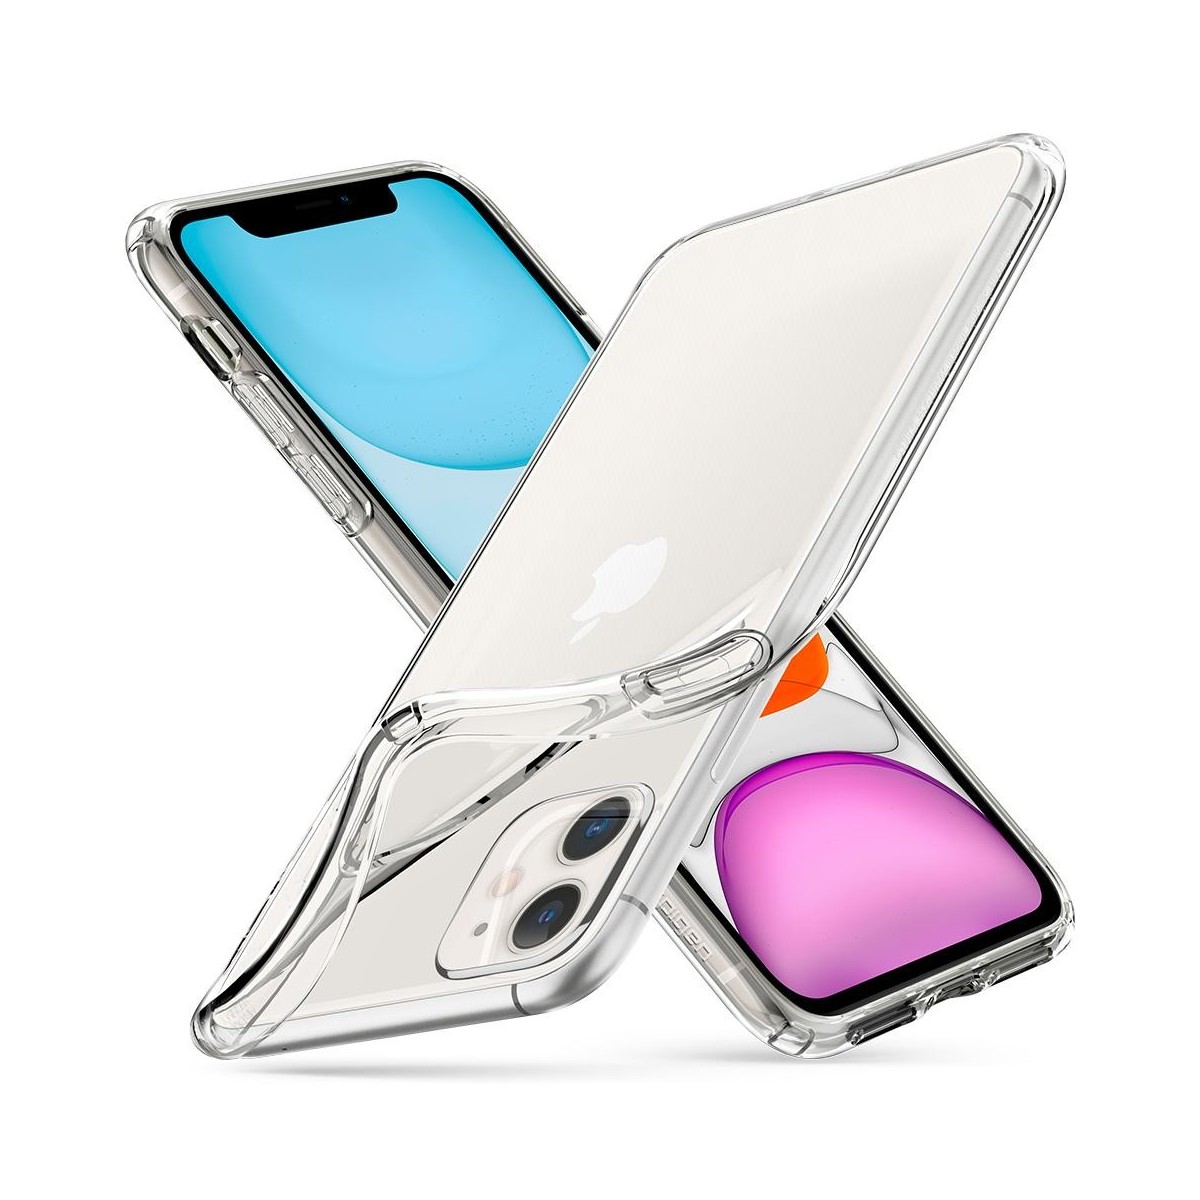 Coque compatible iPhone 11 Liquid Crystal transparente - Spigen